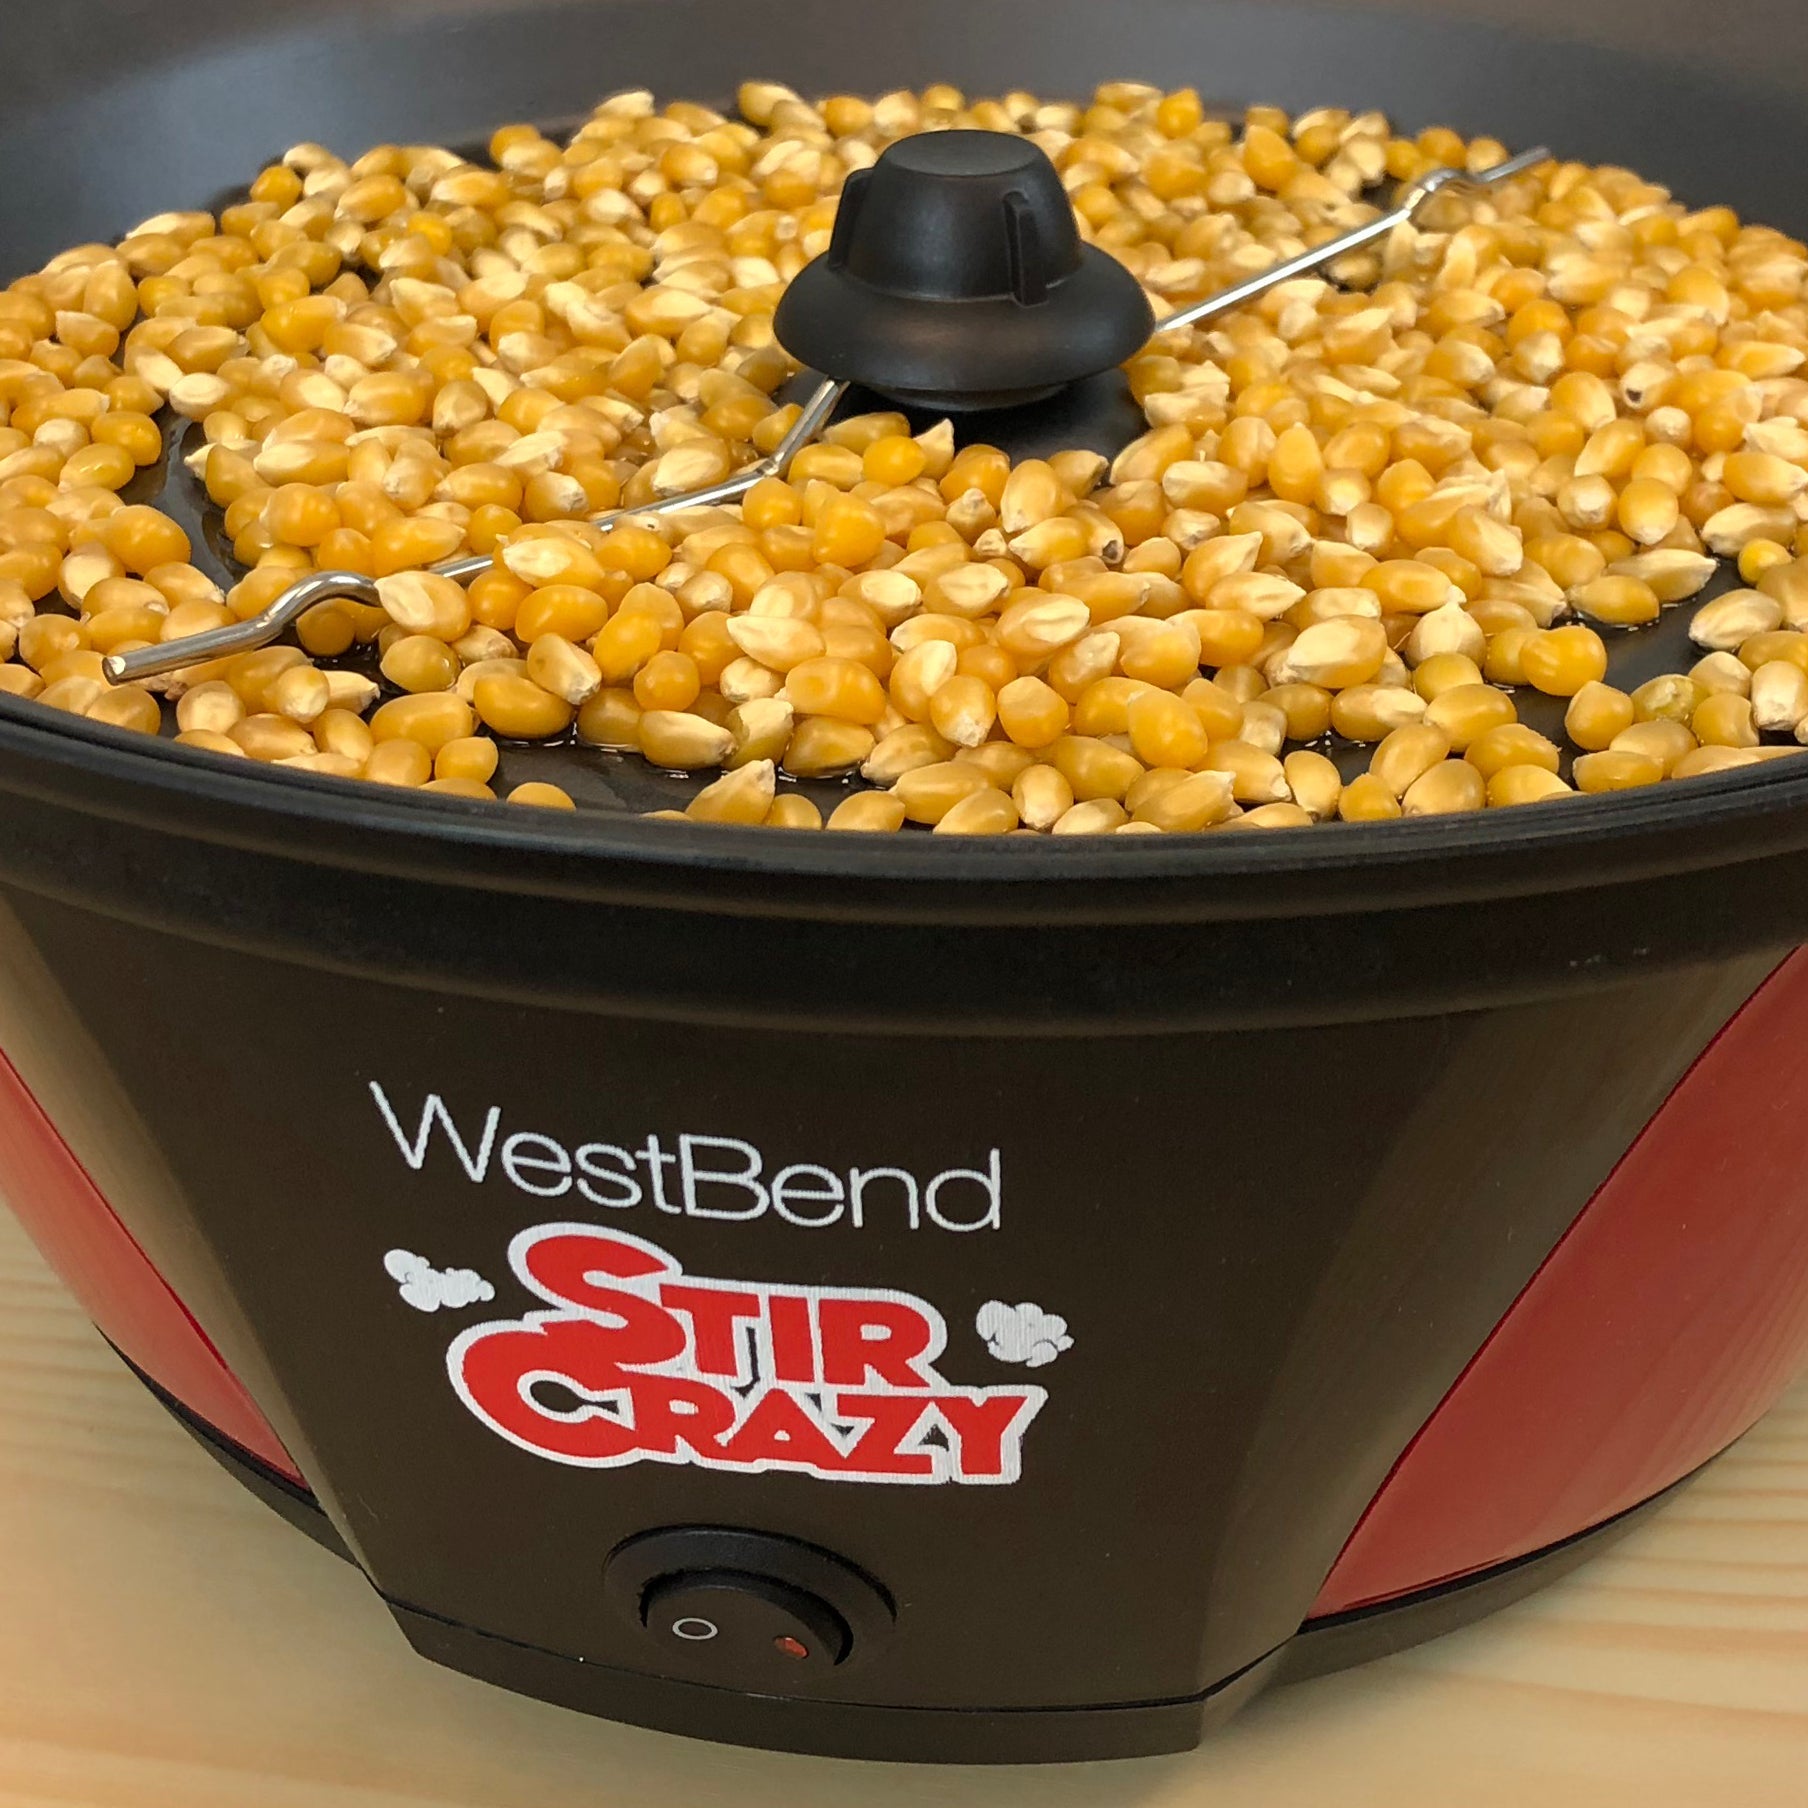 West Bend 82707B Stir Crazy Electric Hot Oil Popcorn Popper